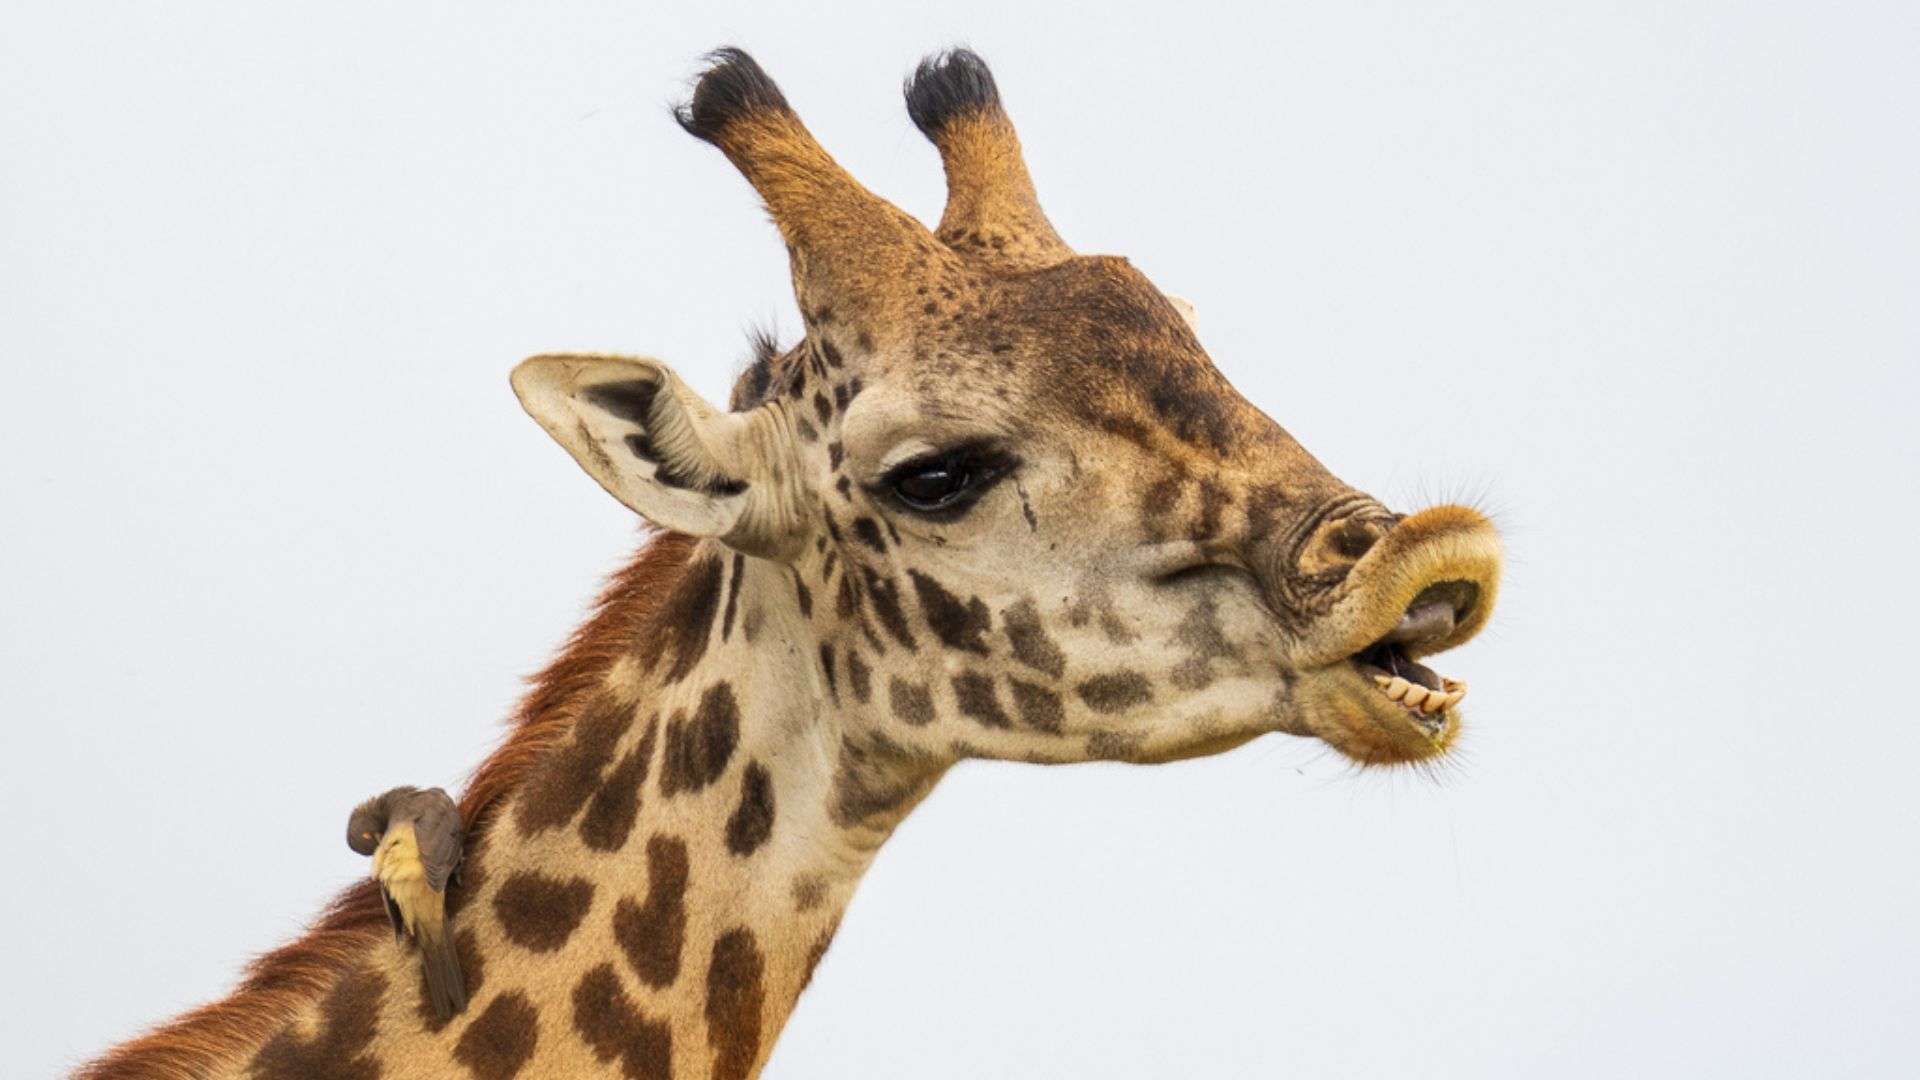 Giraffe up close in Mara Masai